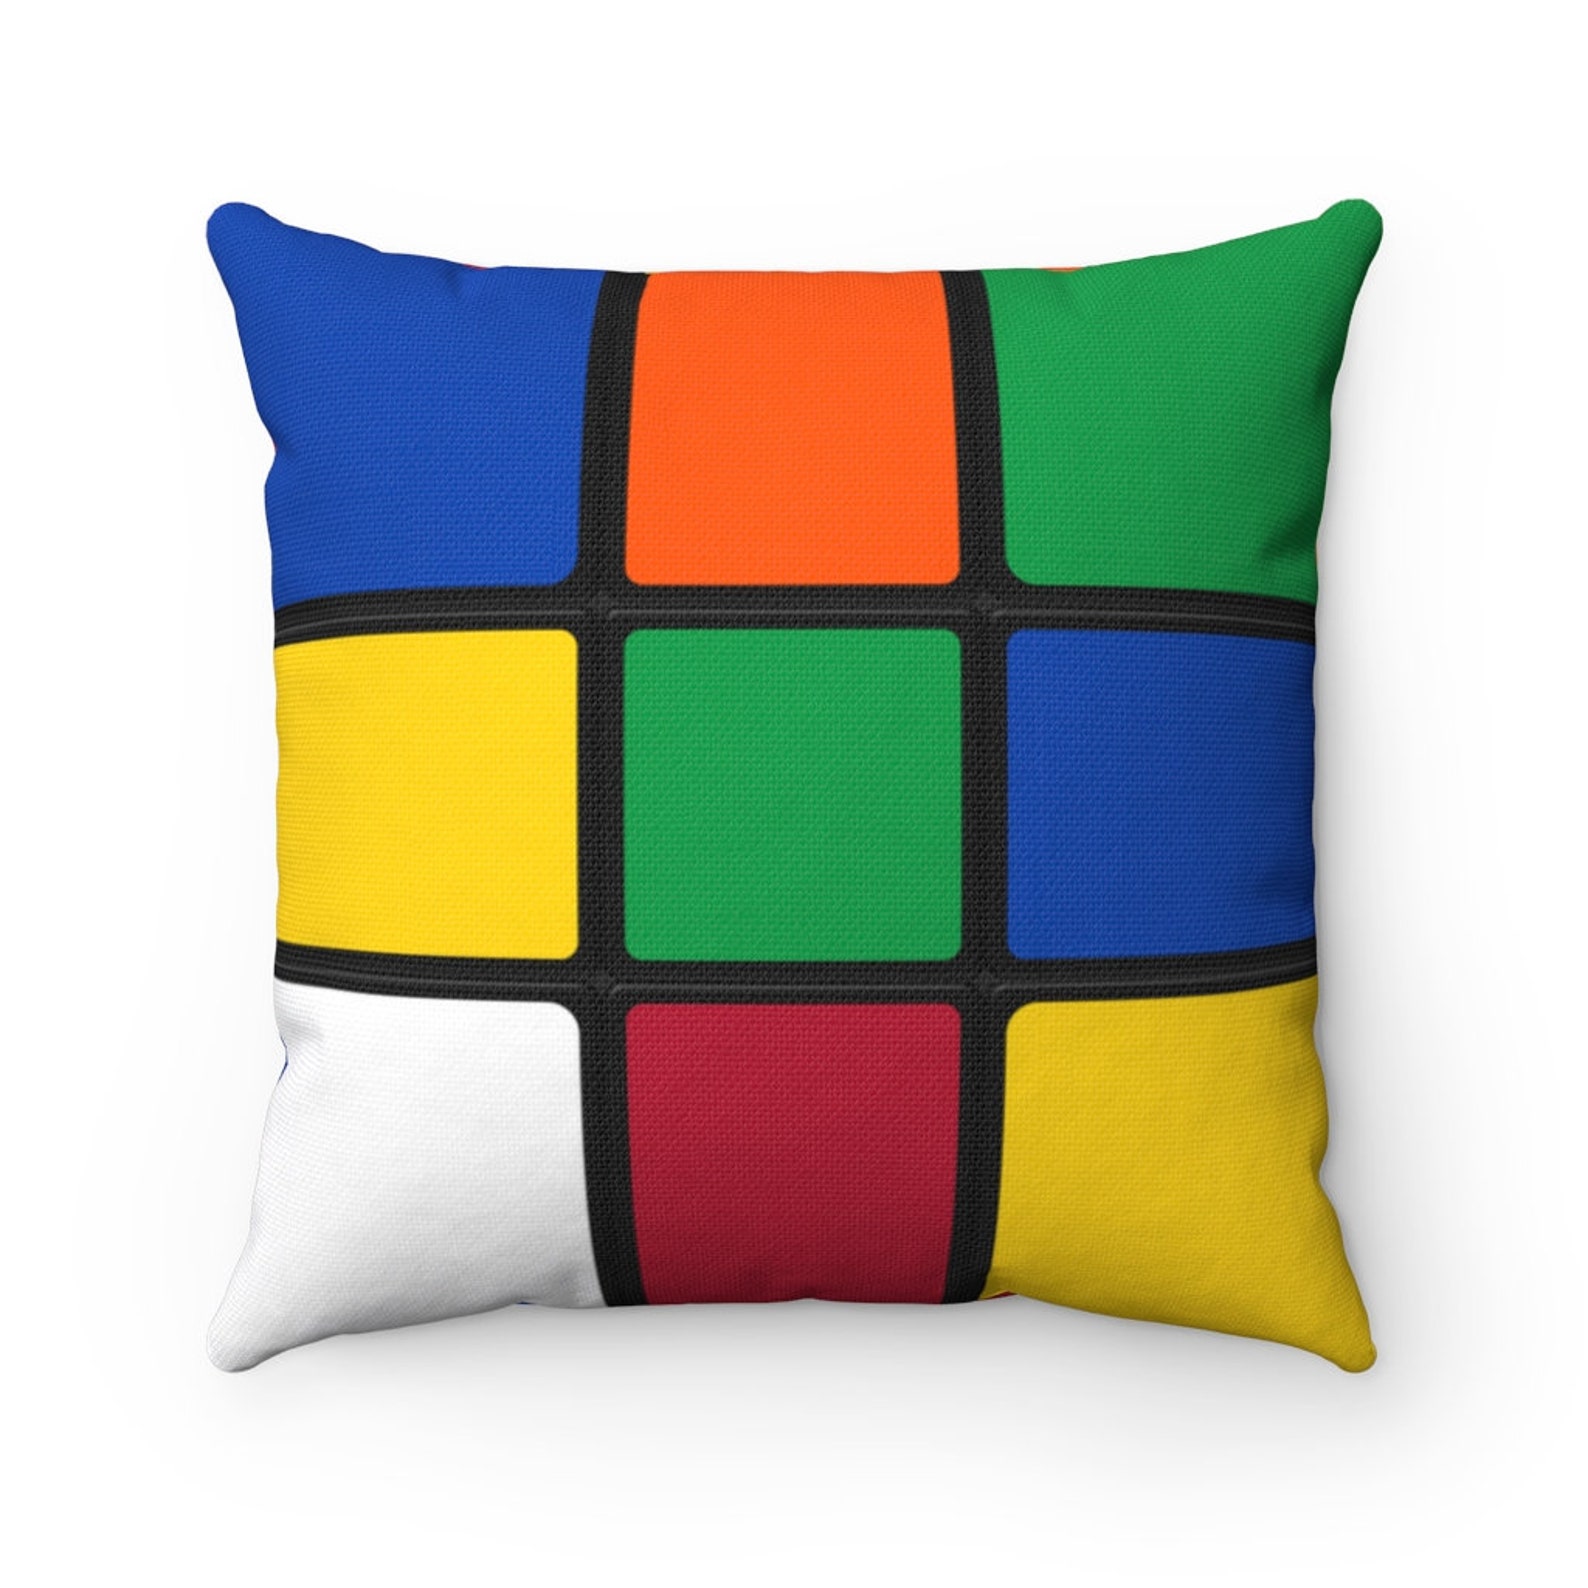 Original Rubiks Cube Pillow 2 Sided Print Square Throw Etsy